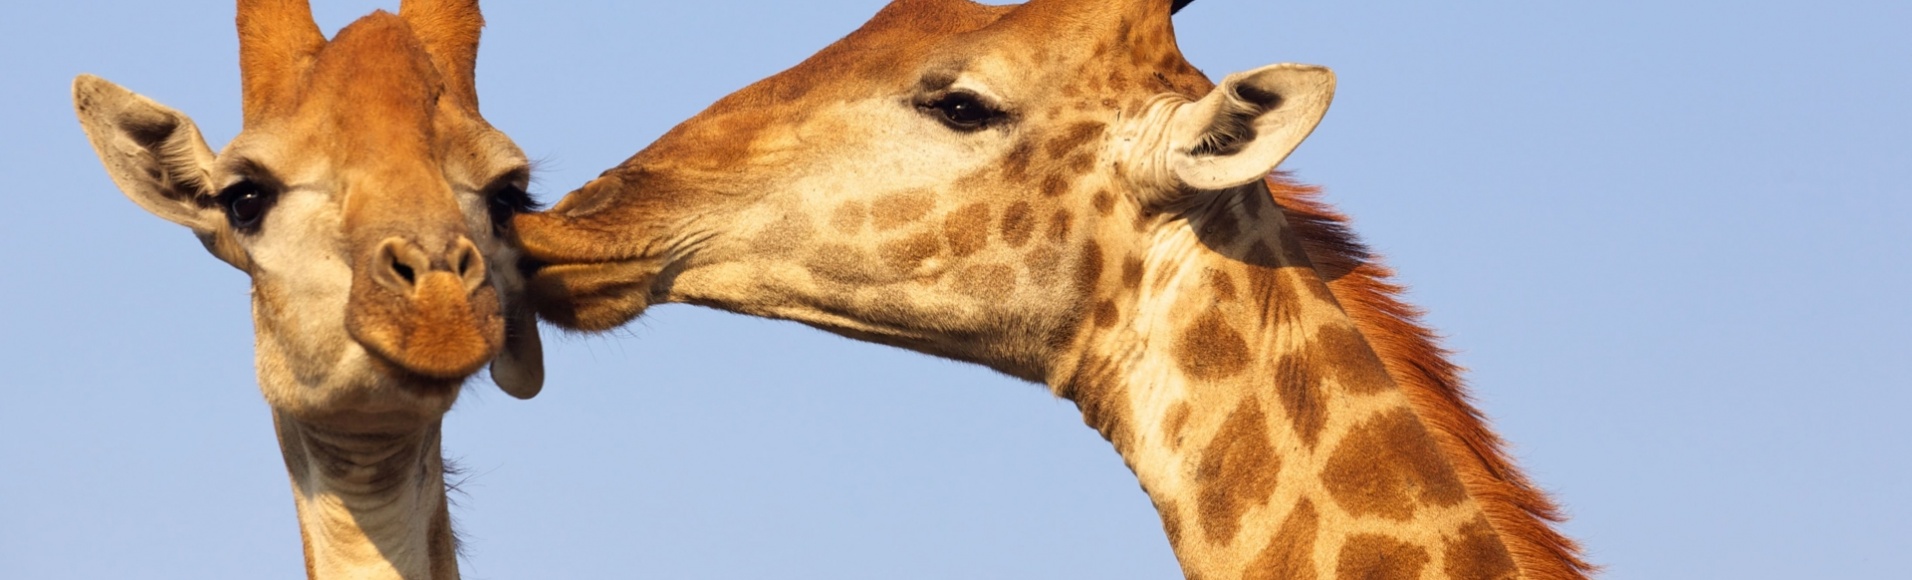 couple-de-girafes-bisous